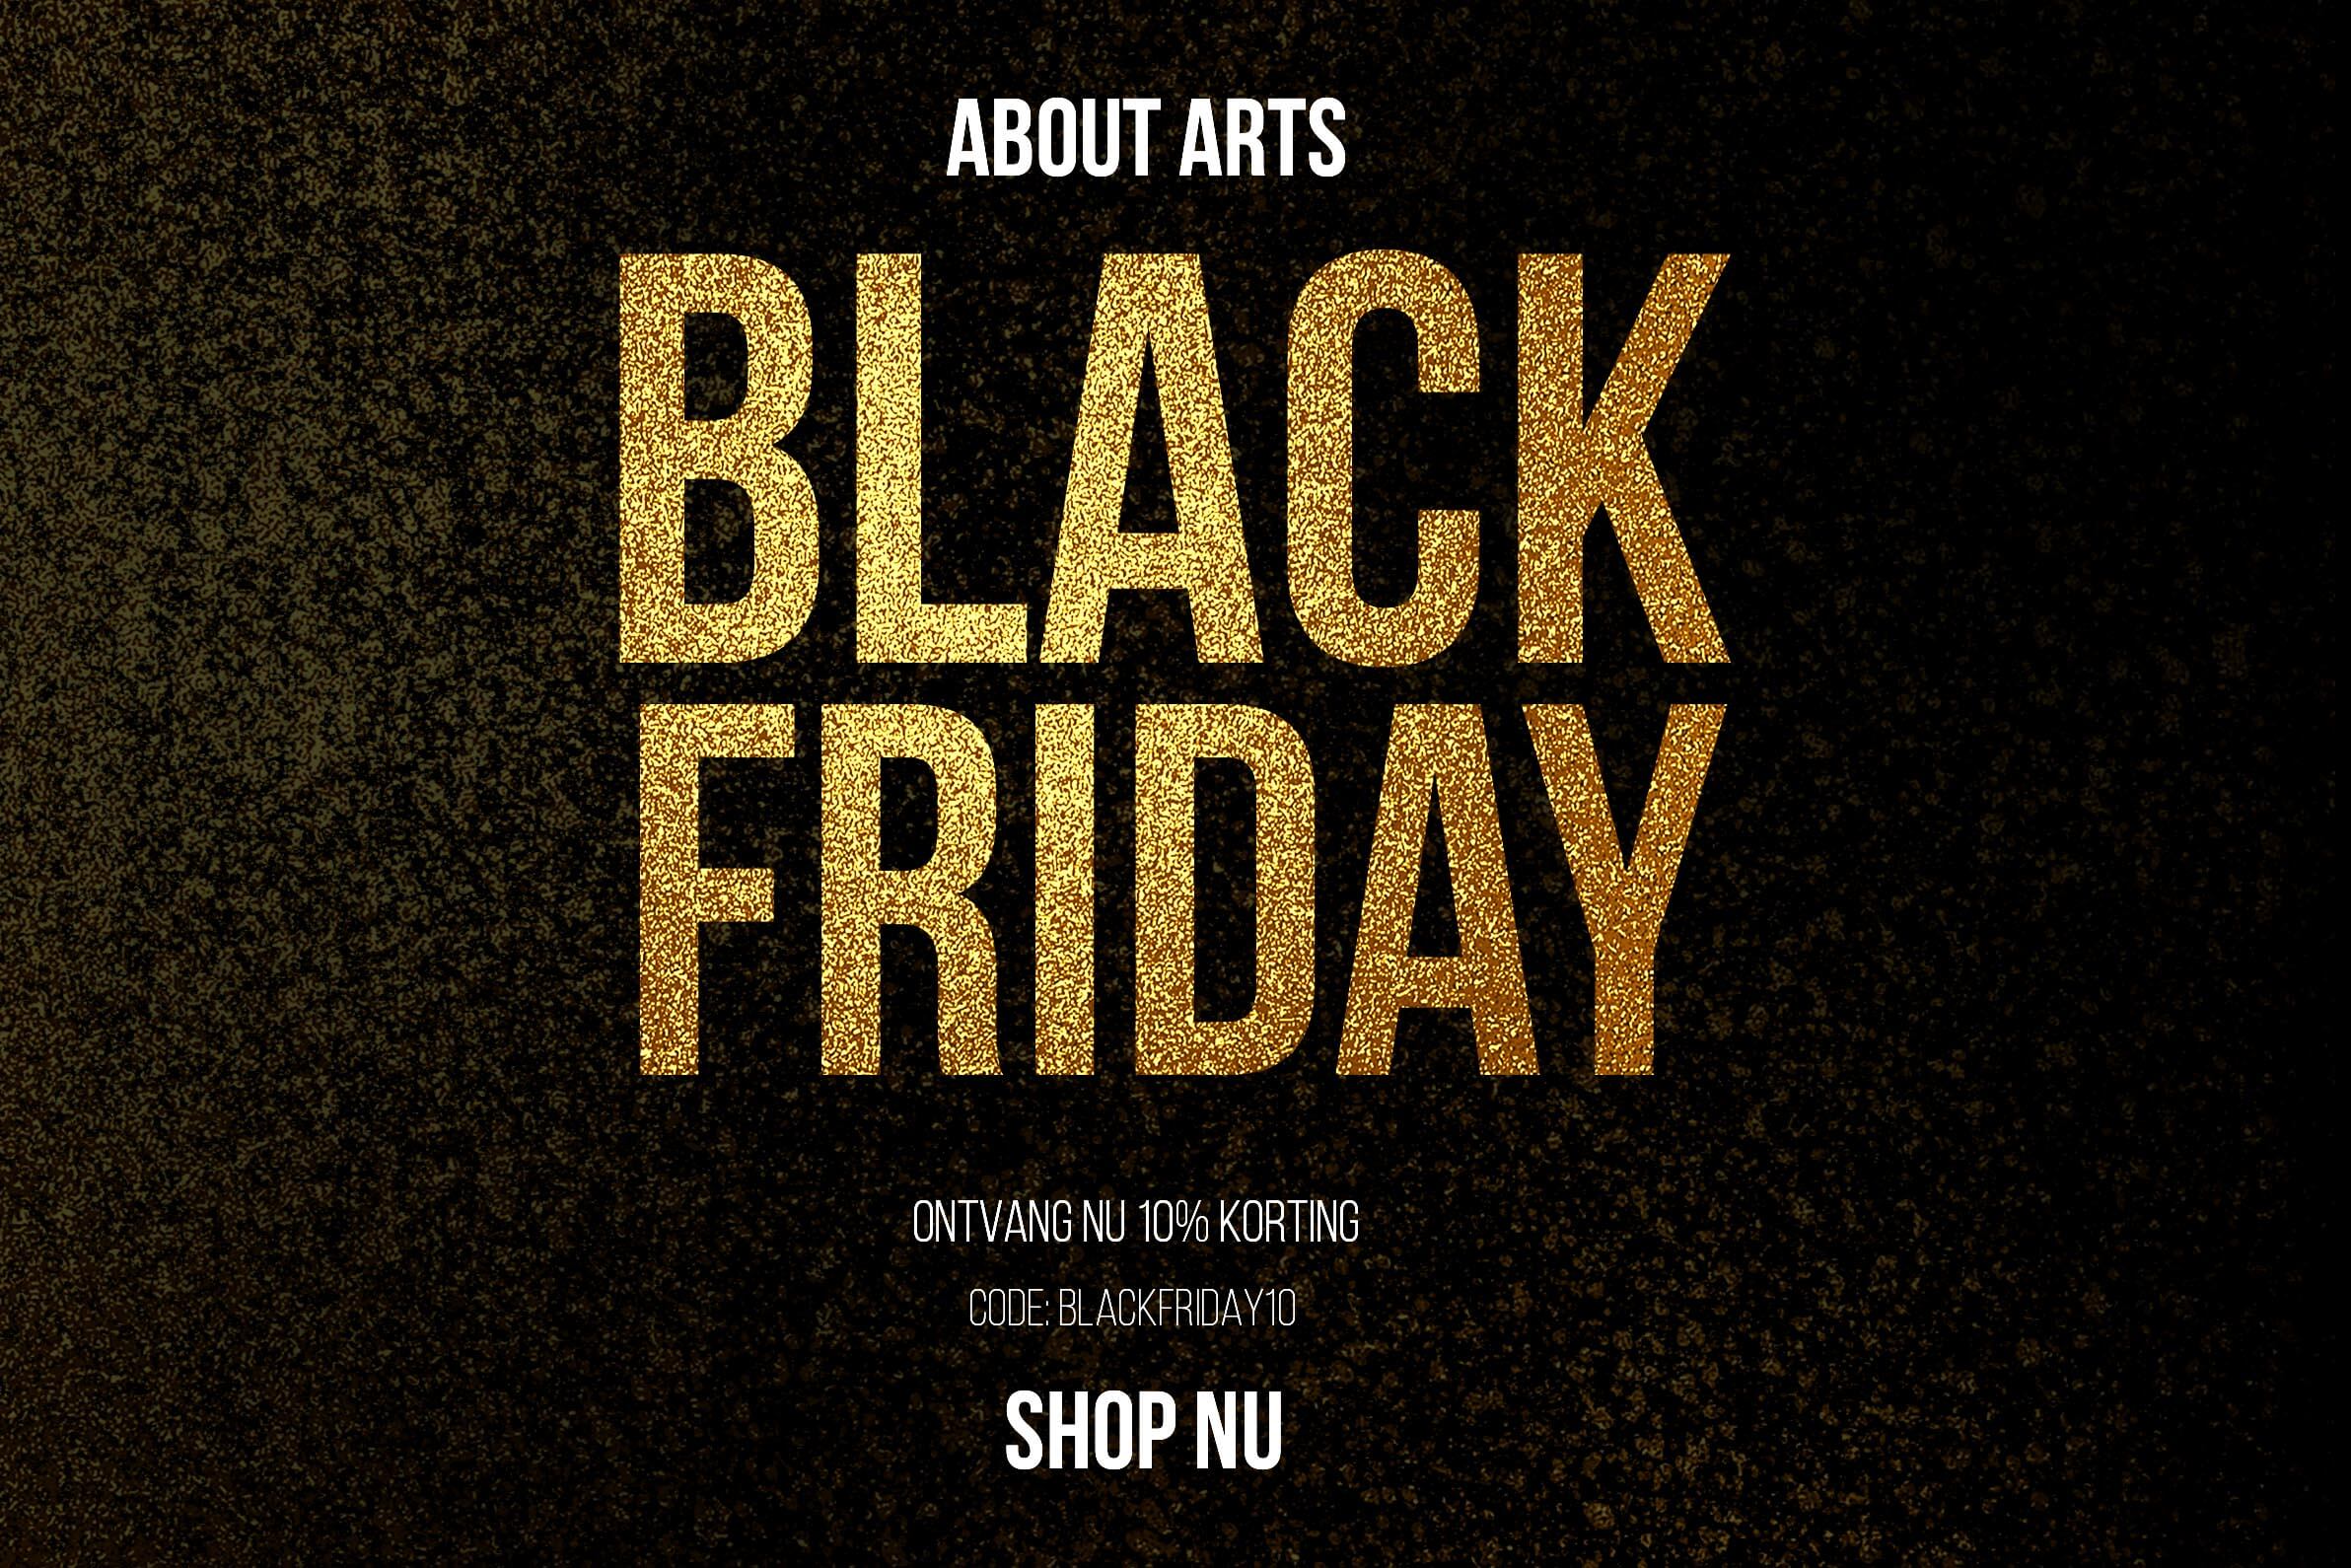 Black friday sale bij About Arts!